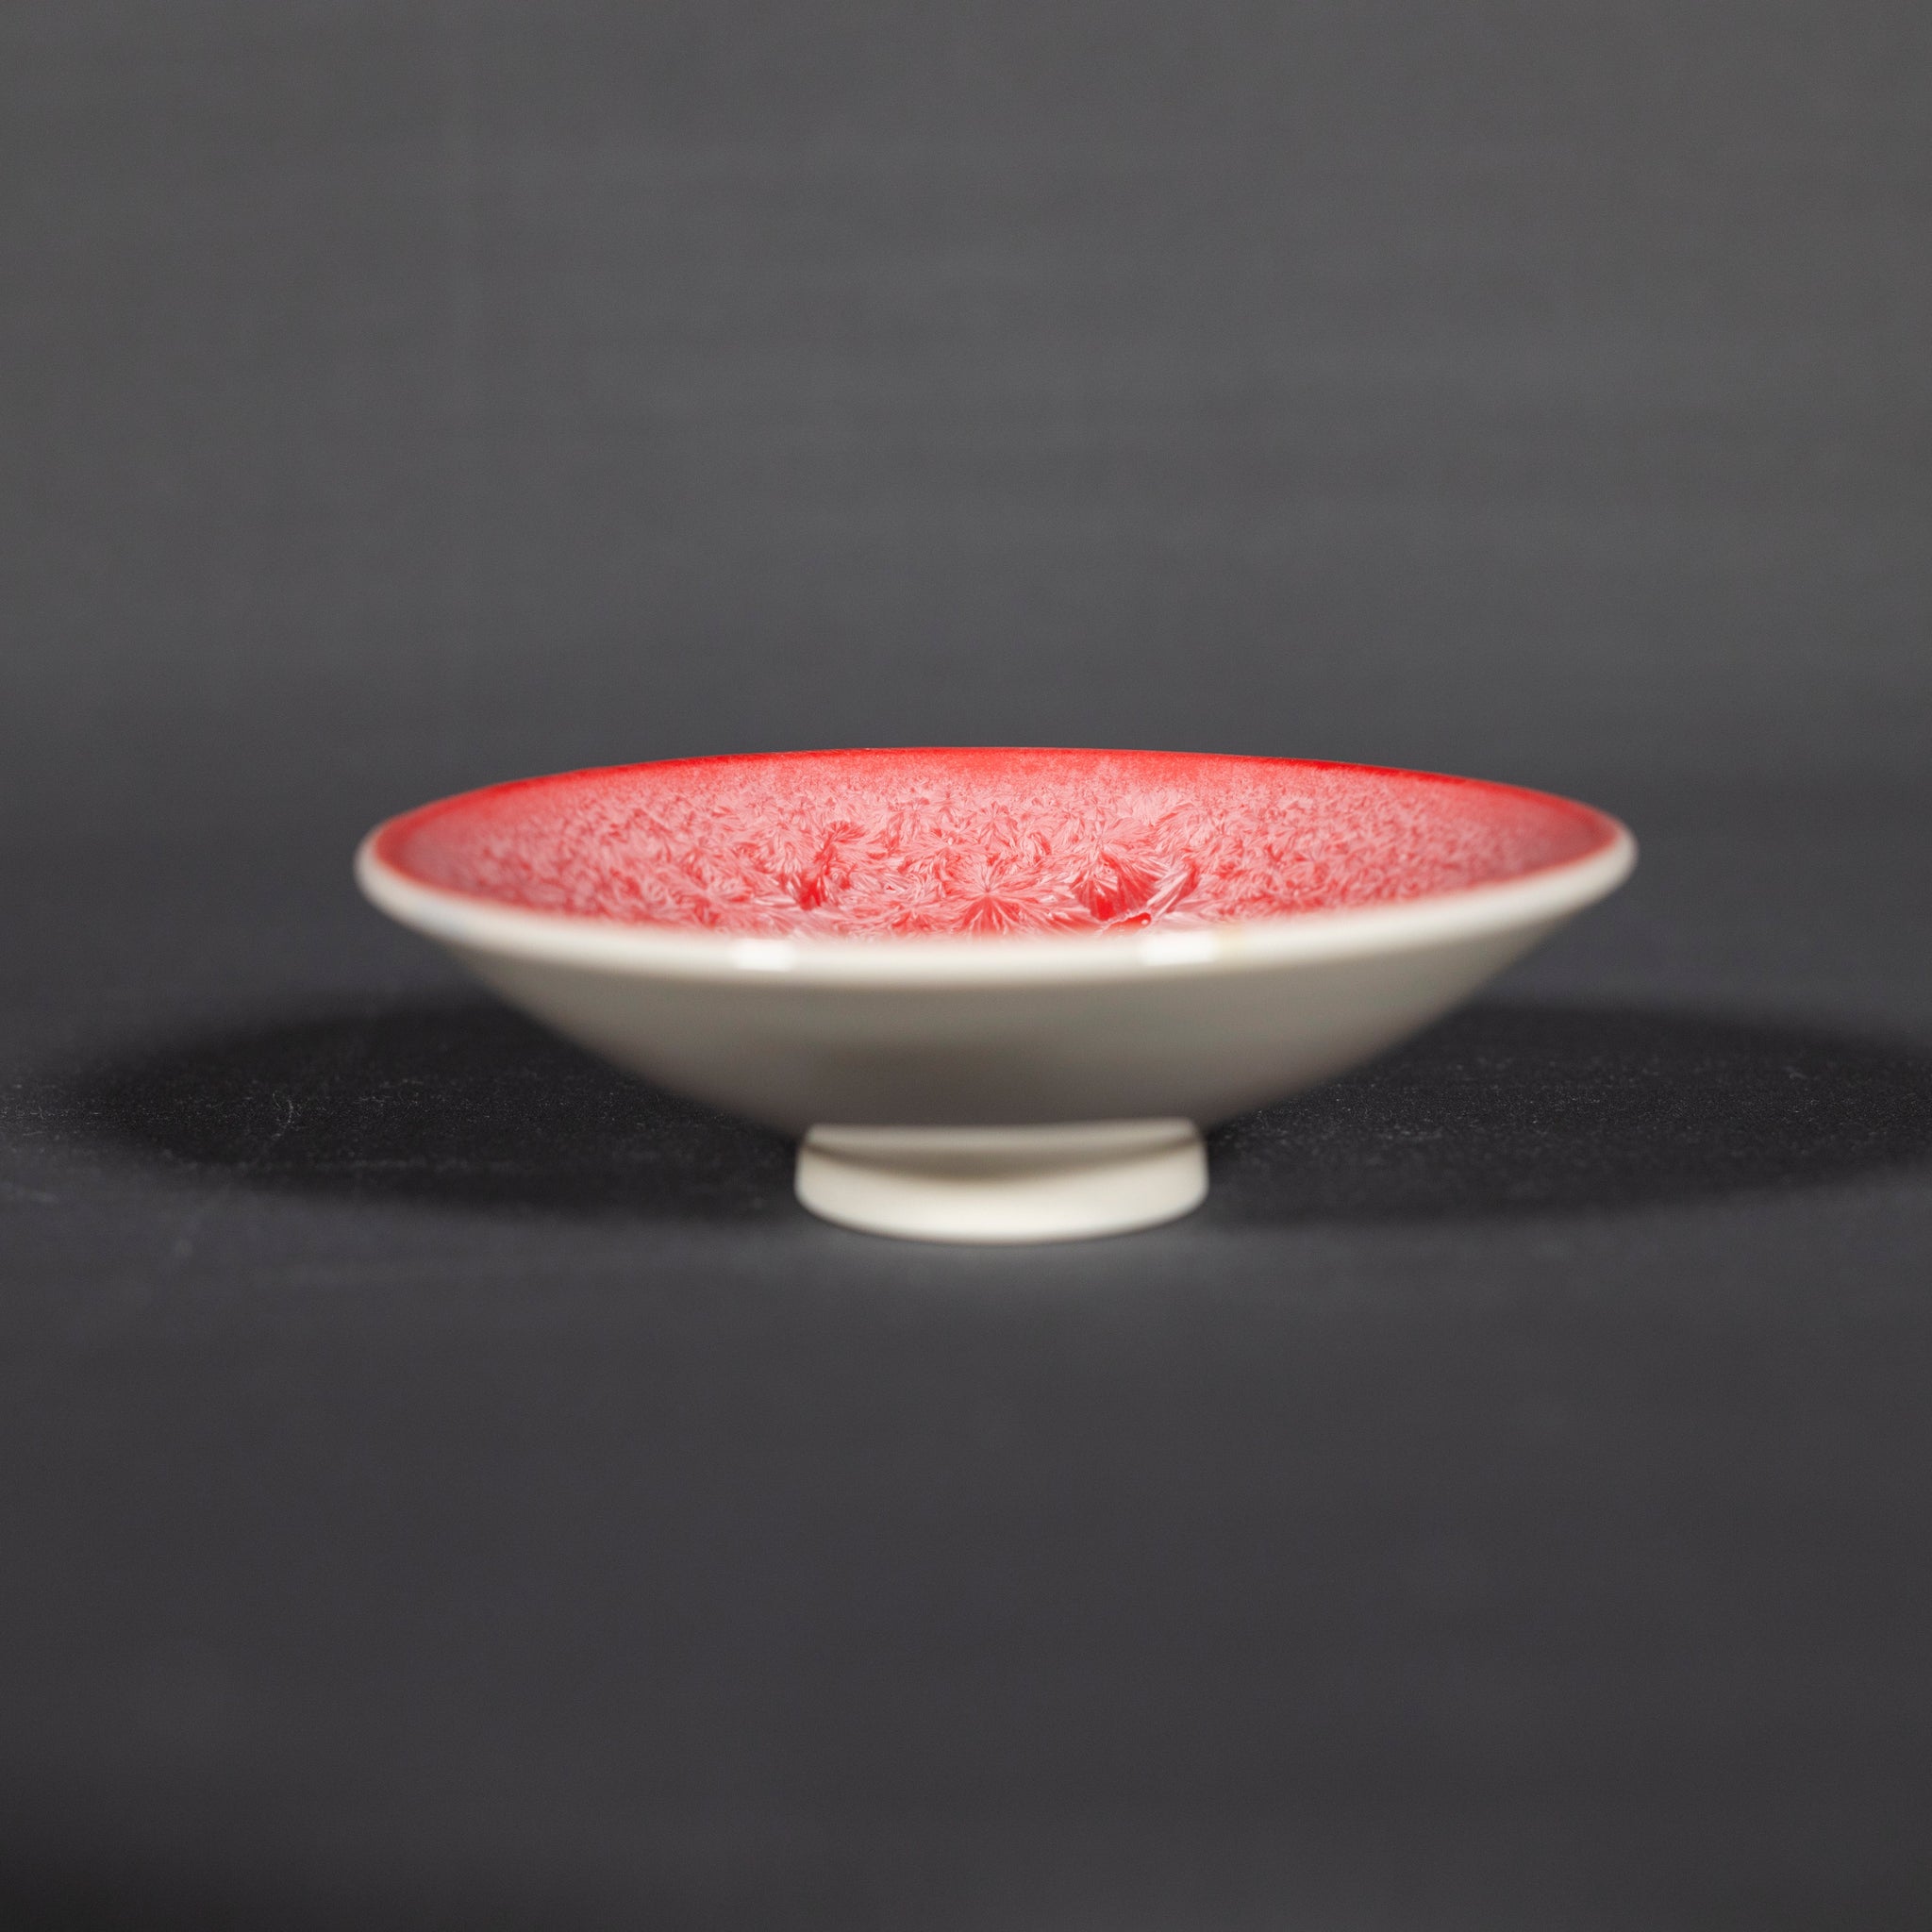 Miniature Red Crystalline Bowl